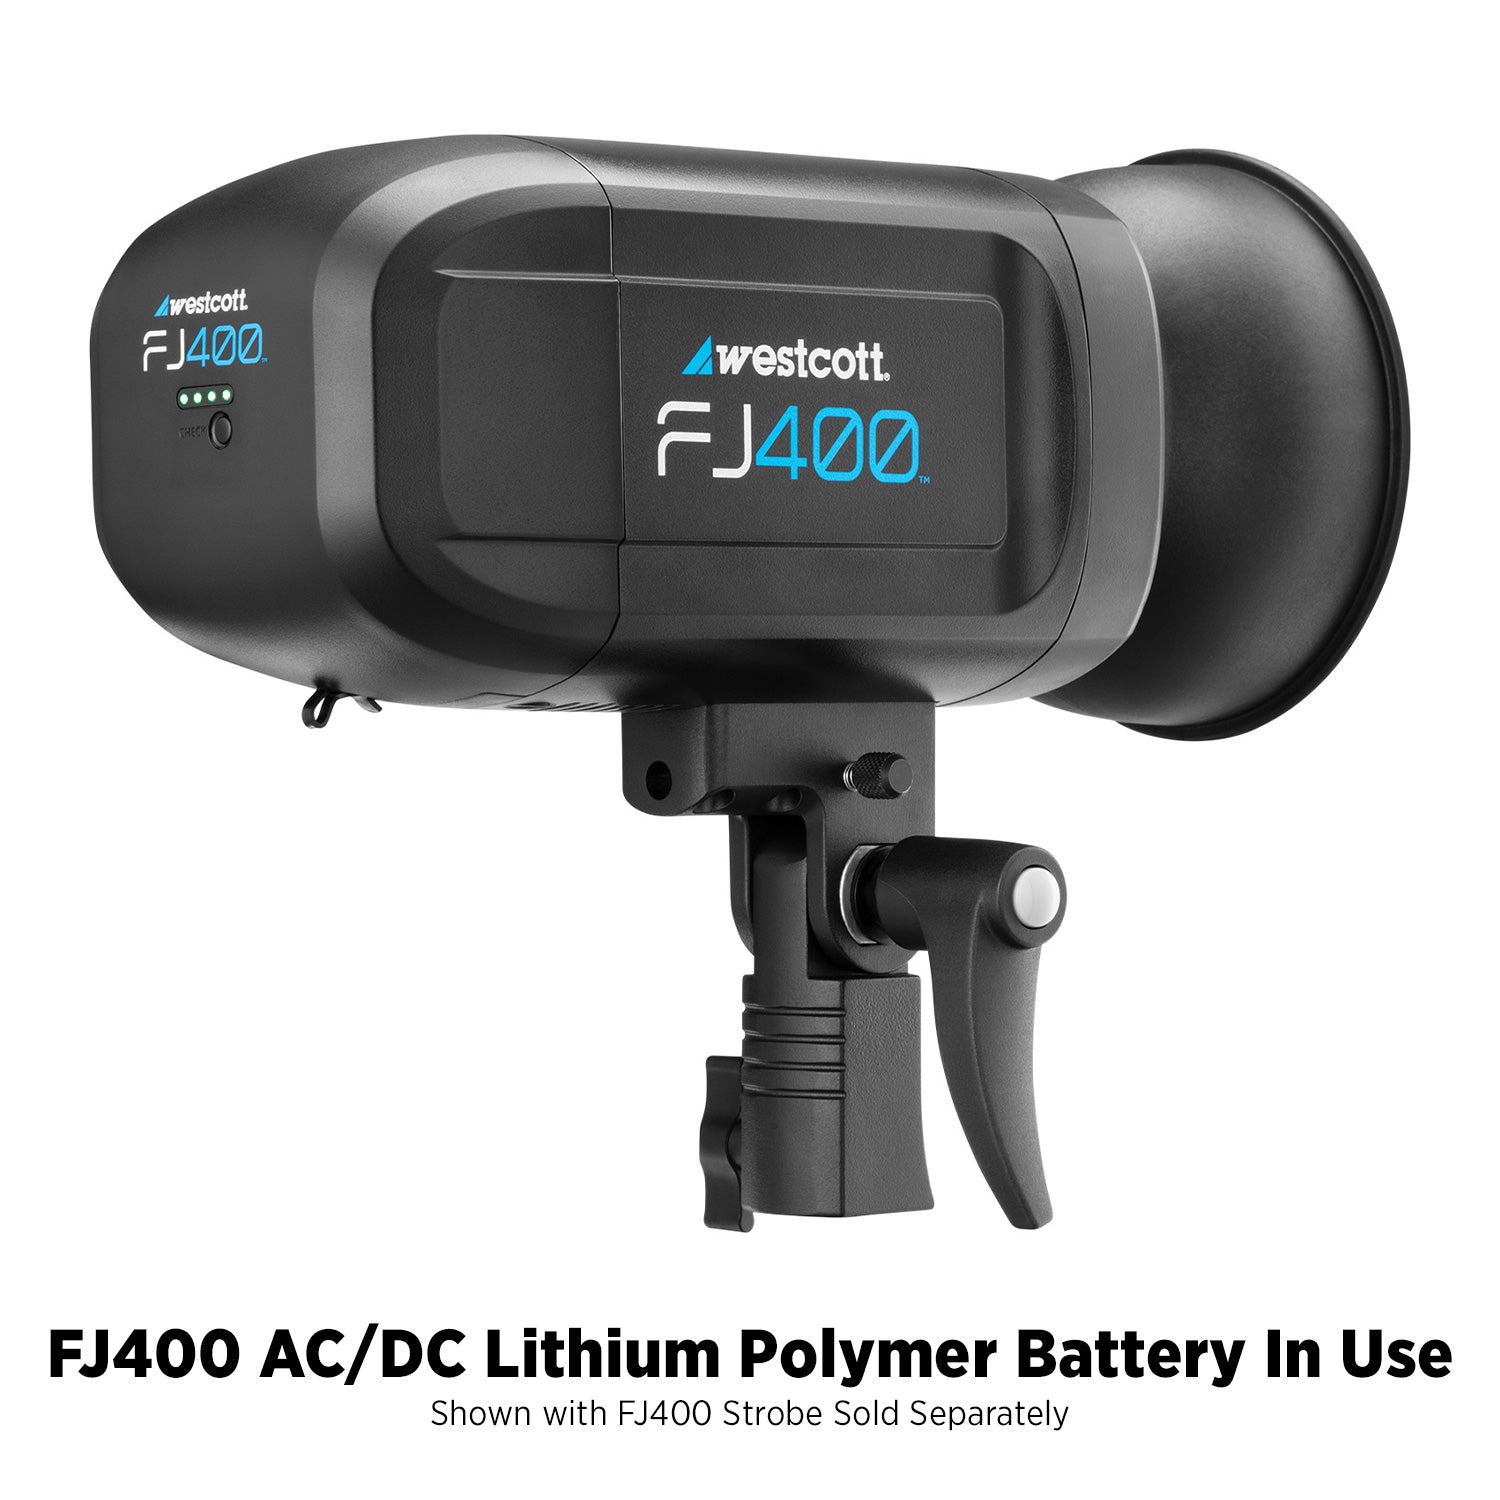 FJ400 AC/DC Lithium Polymer Battery